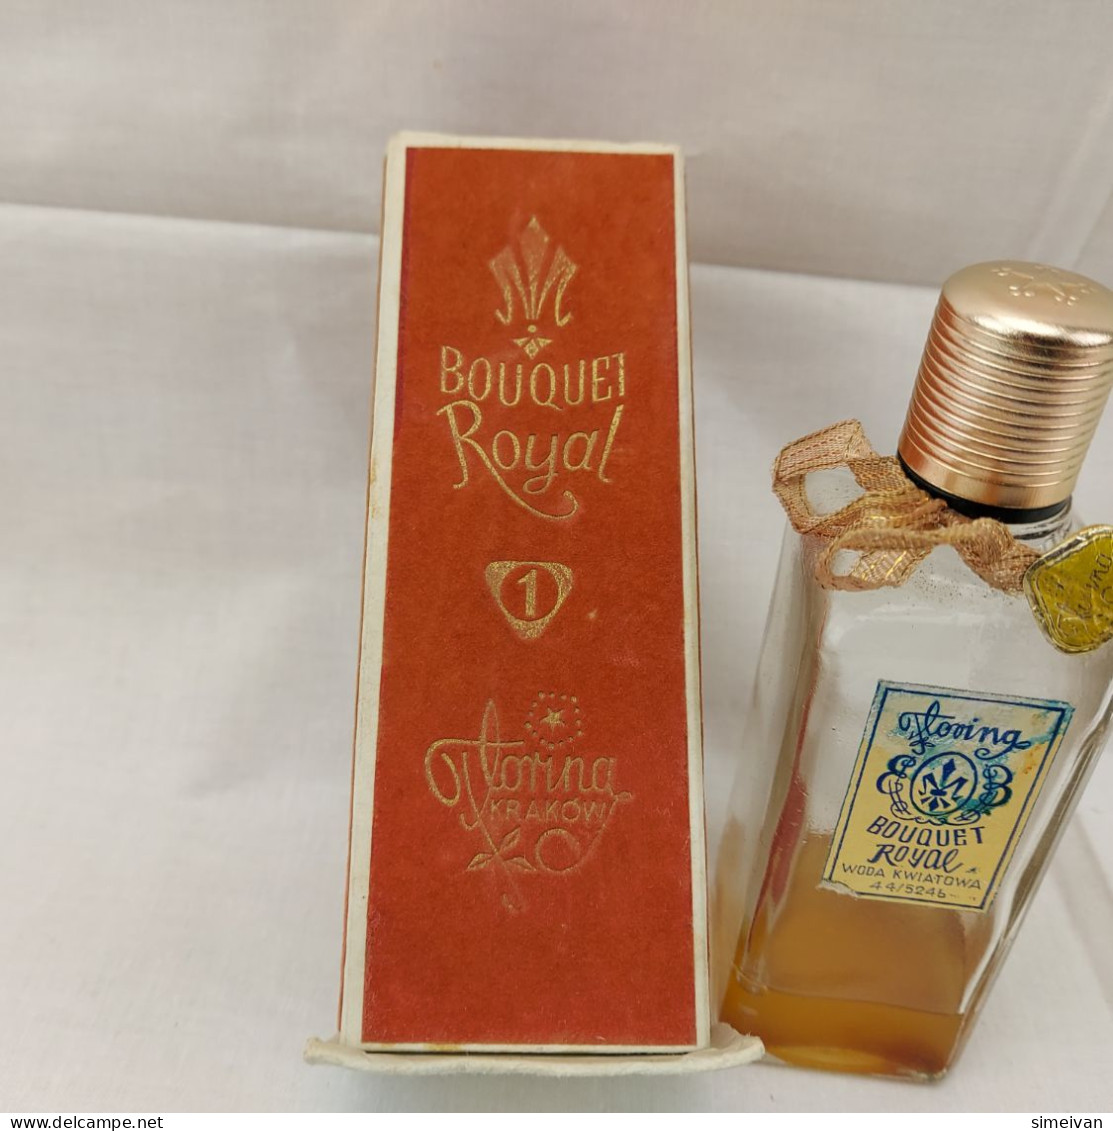 Vintage Glass Perfume Bottle Bouquet Royal Florina Krakow in a Box 100ml #1301